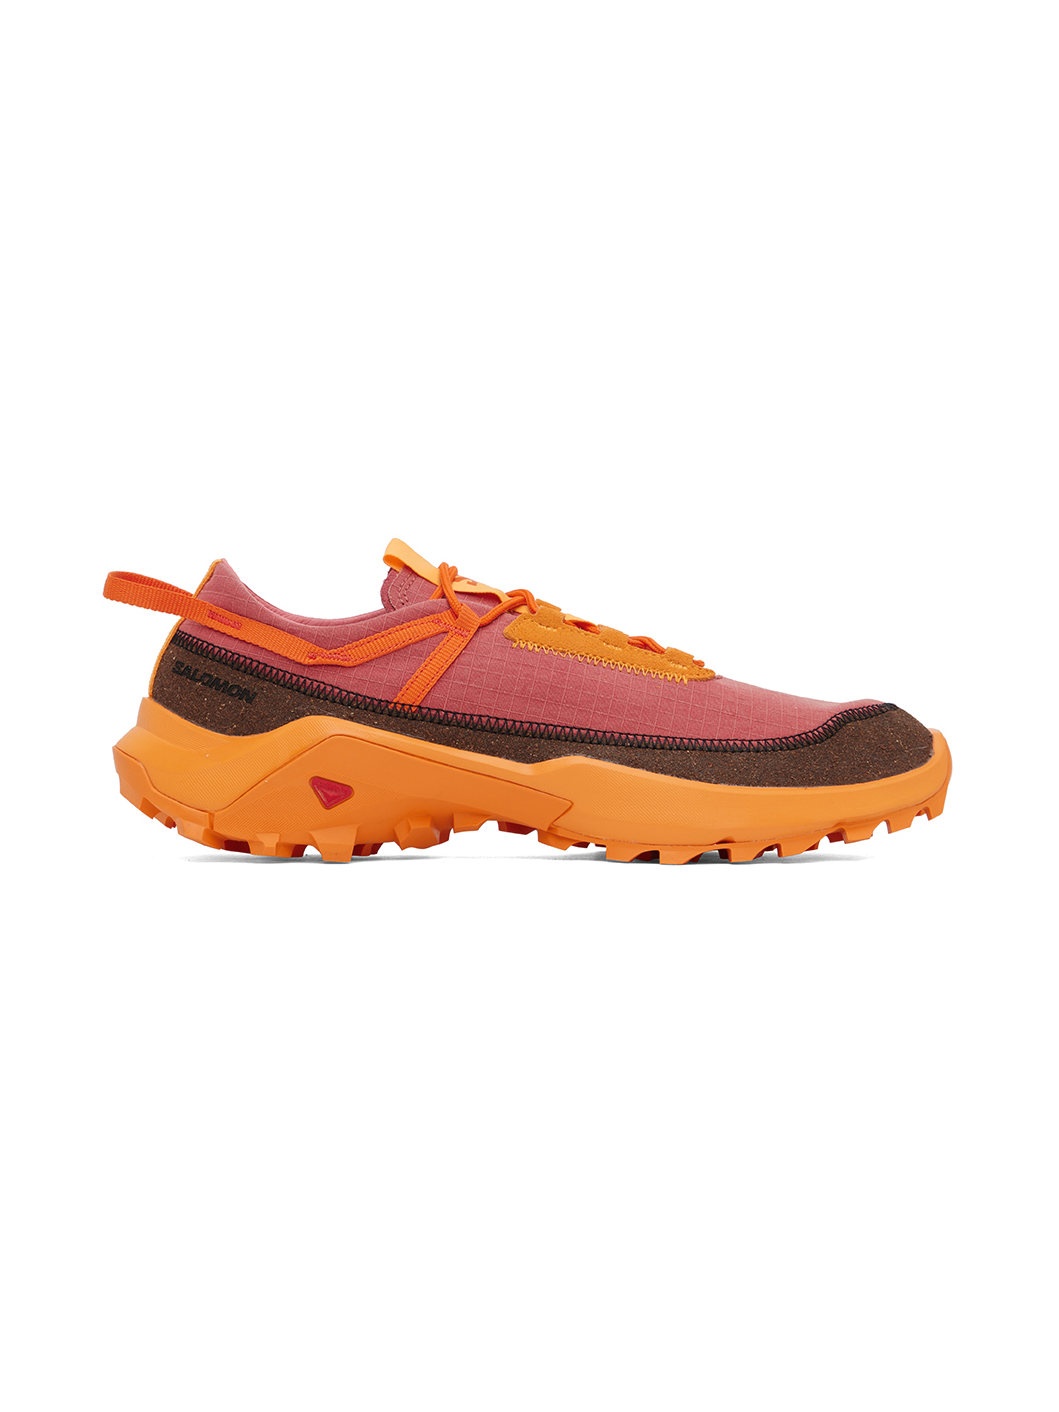 Red & Orange Salomon Edition Cross Pro Better Sneakers - 1